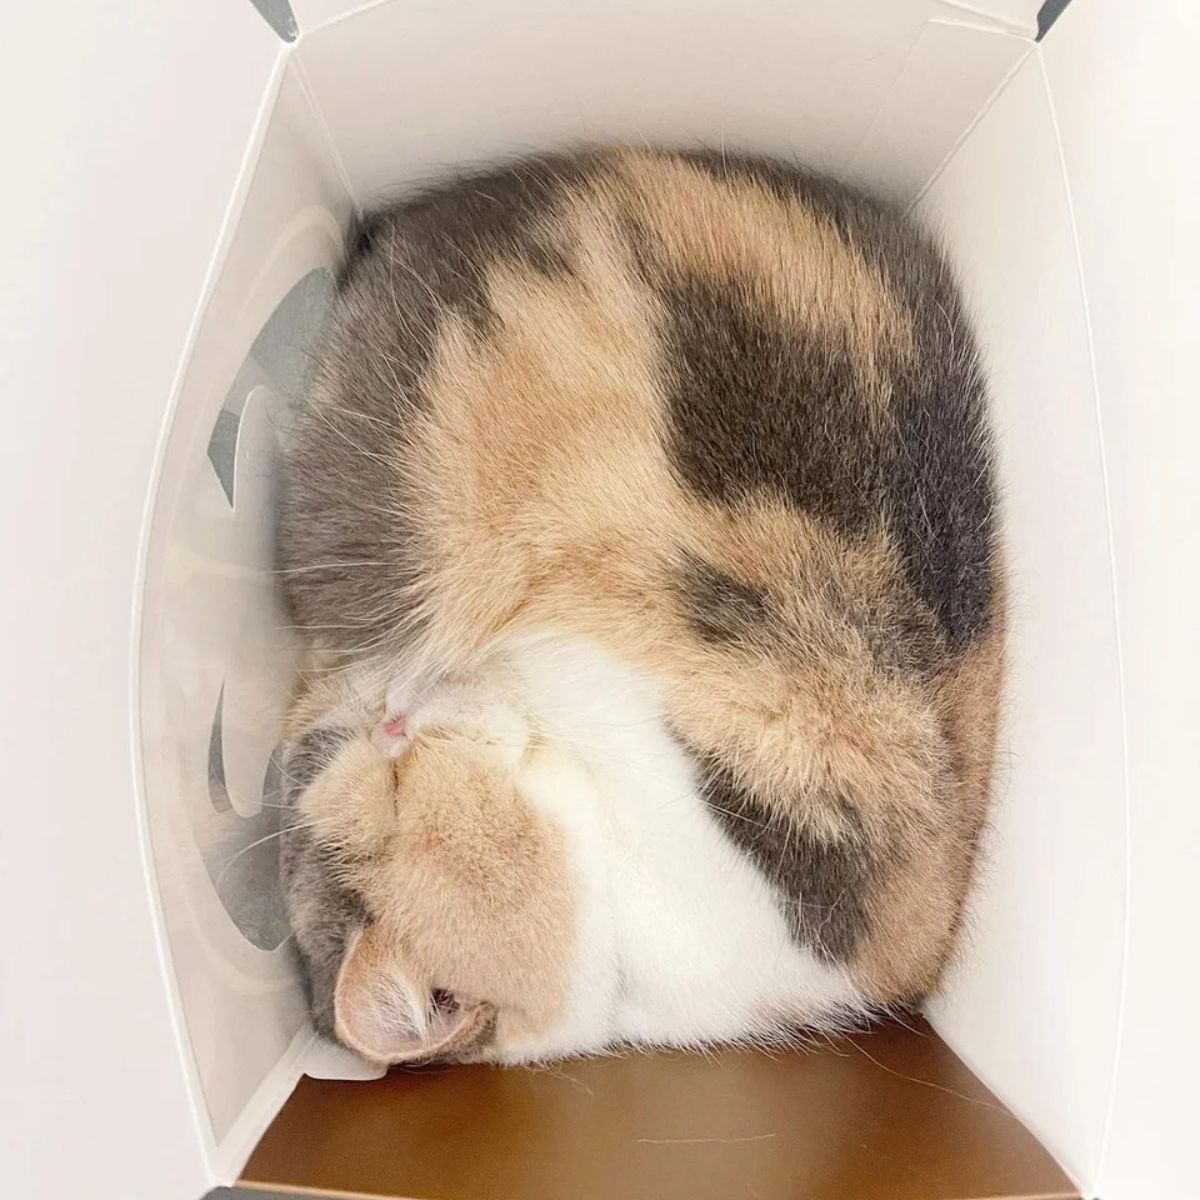 white orange and black cat sleeping inside a plastic tub